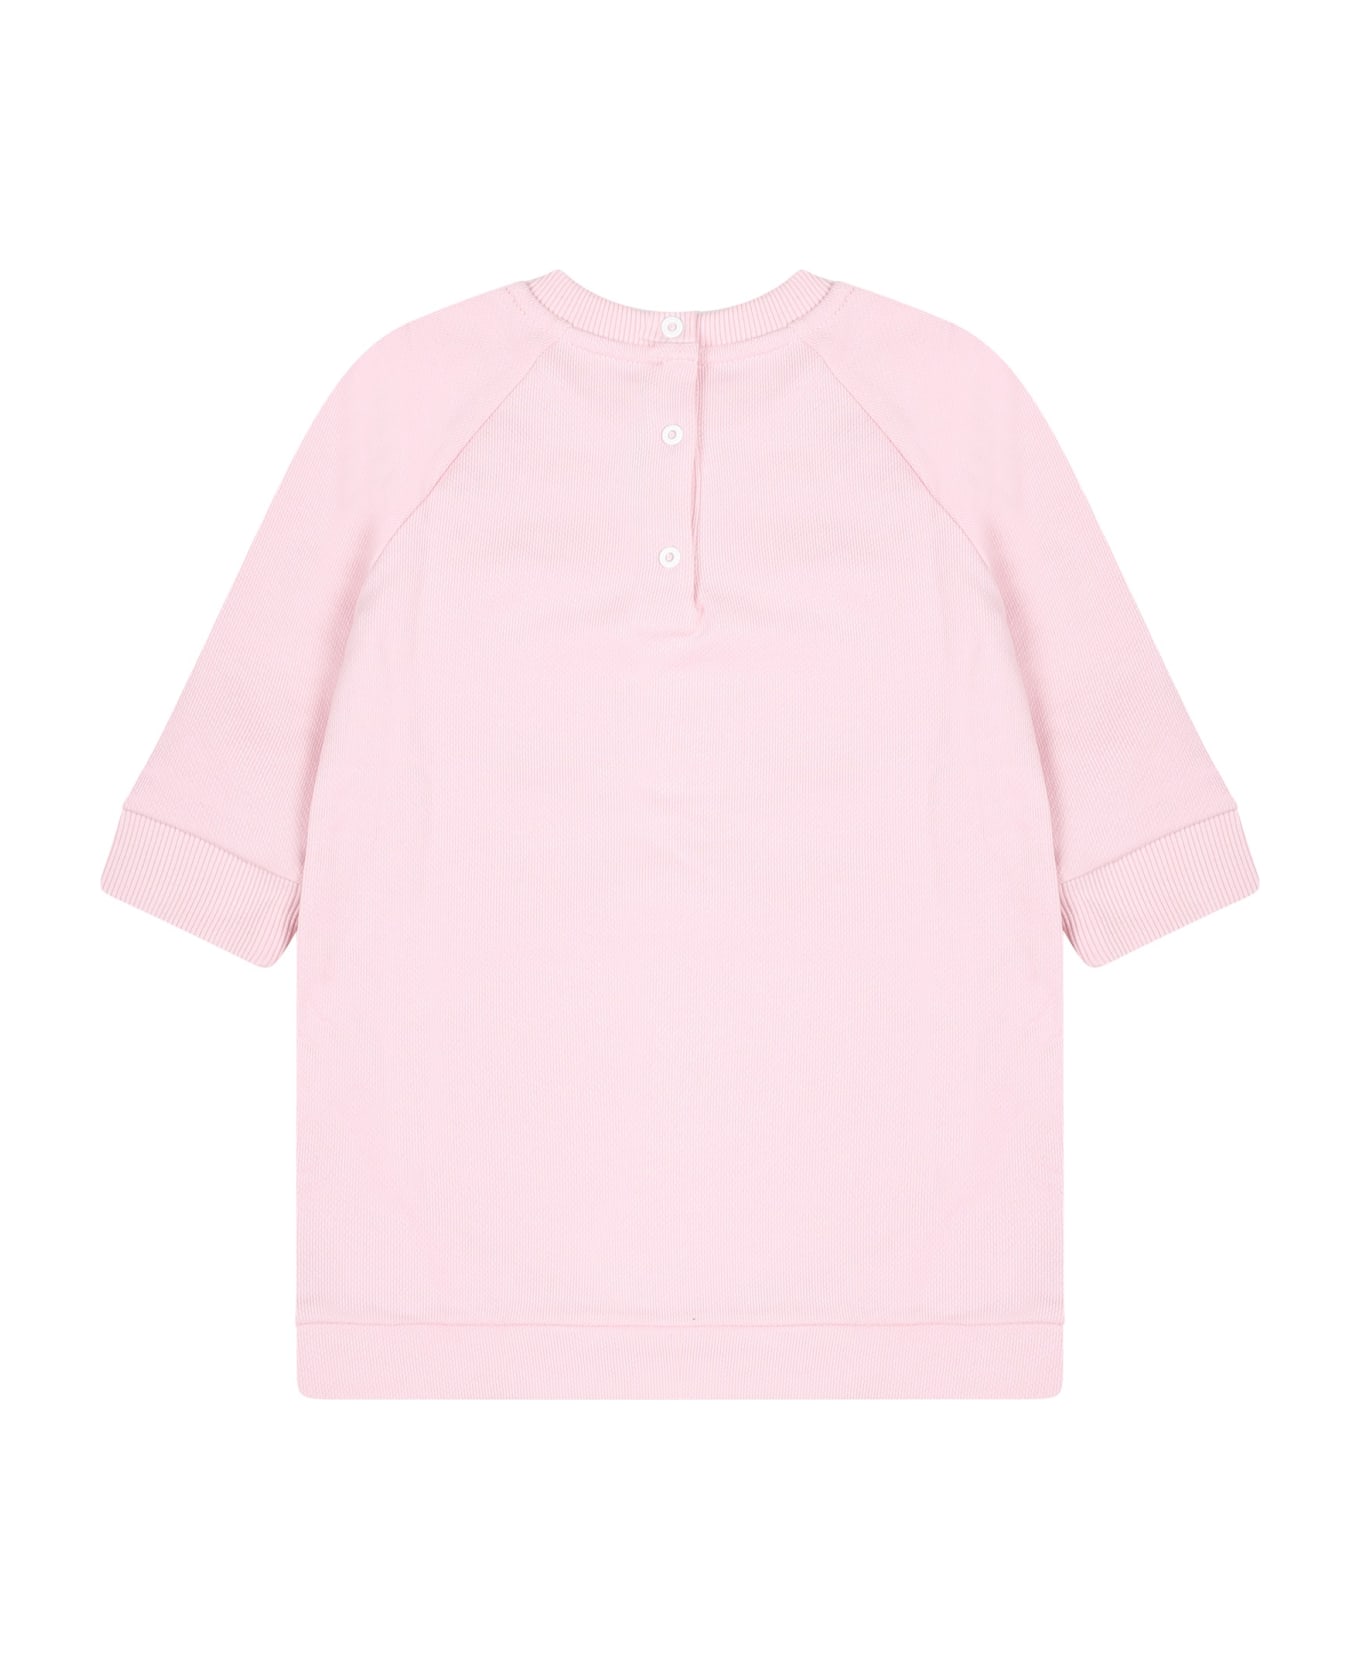 Balmain Pink Dress For Baby Girl With Logo - Pink